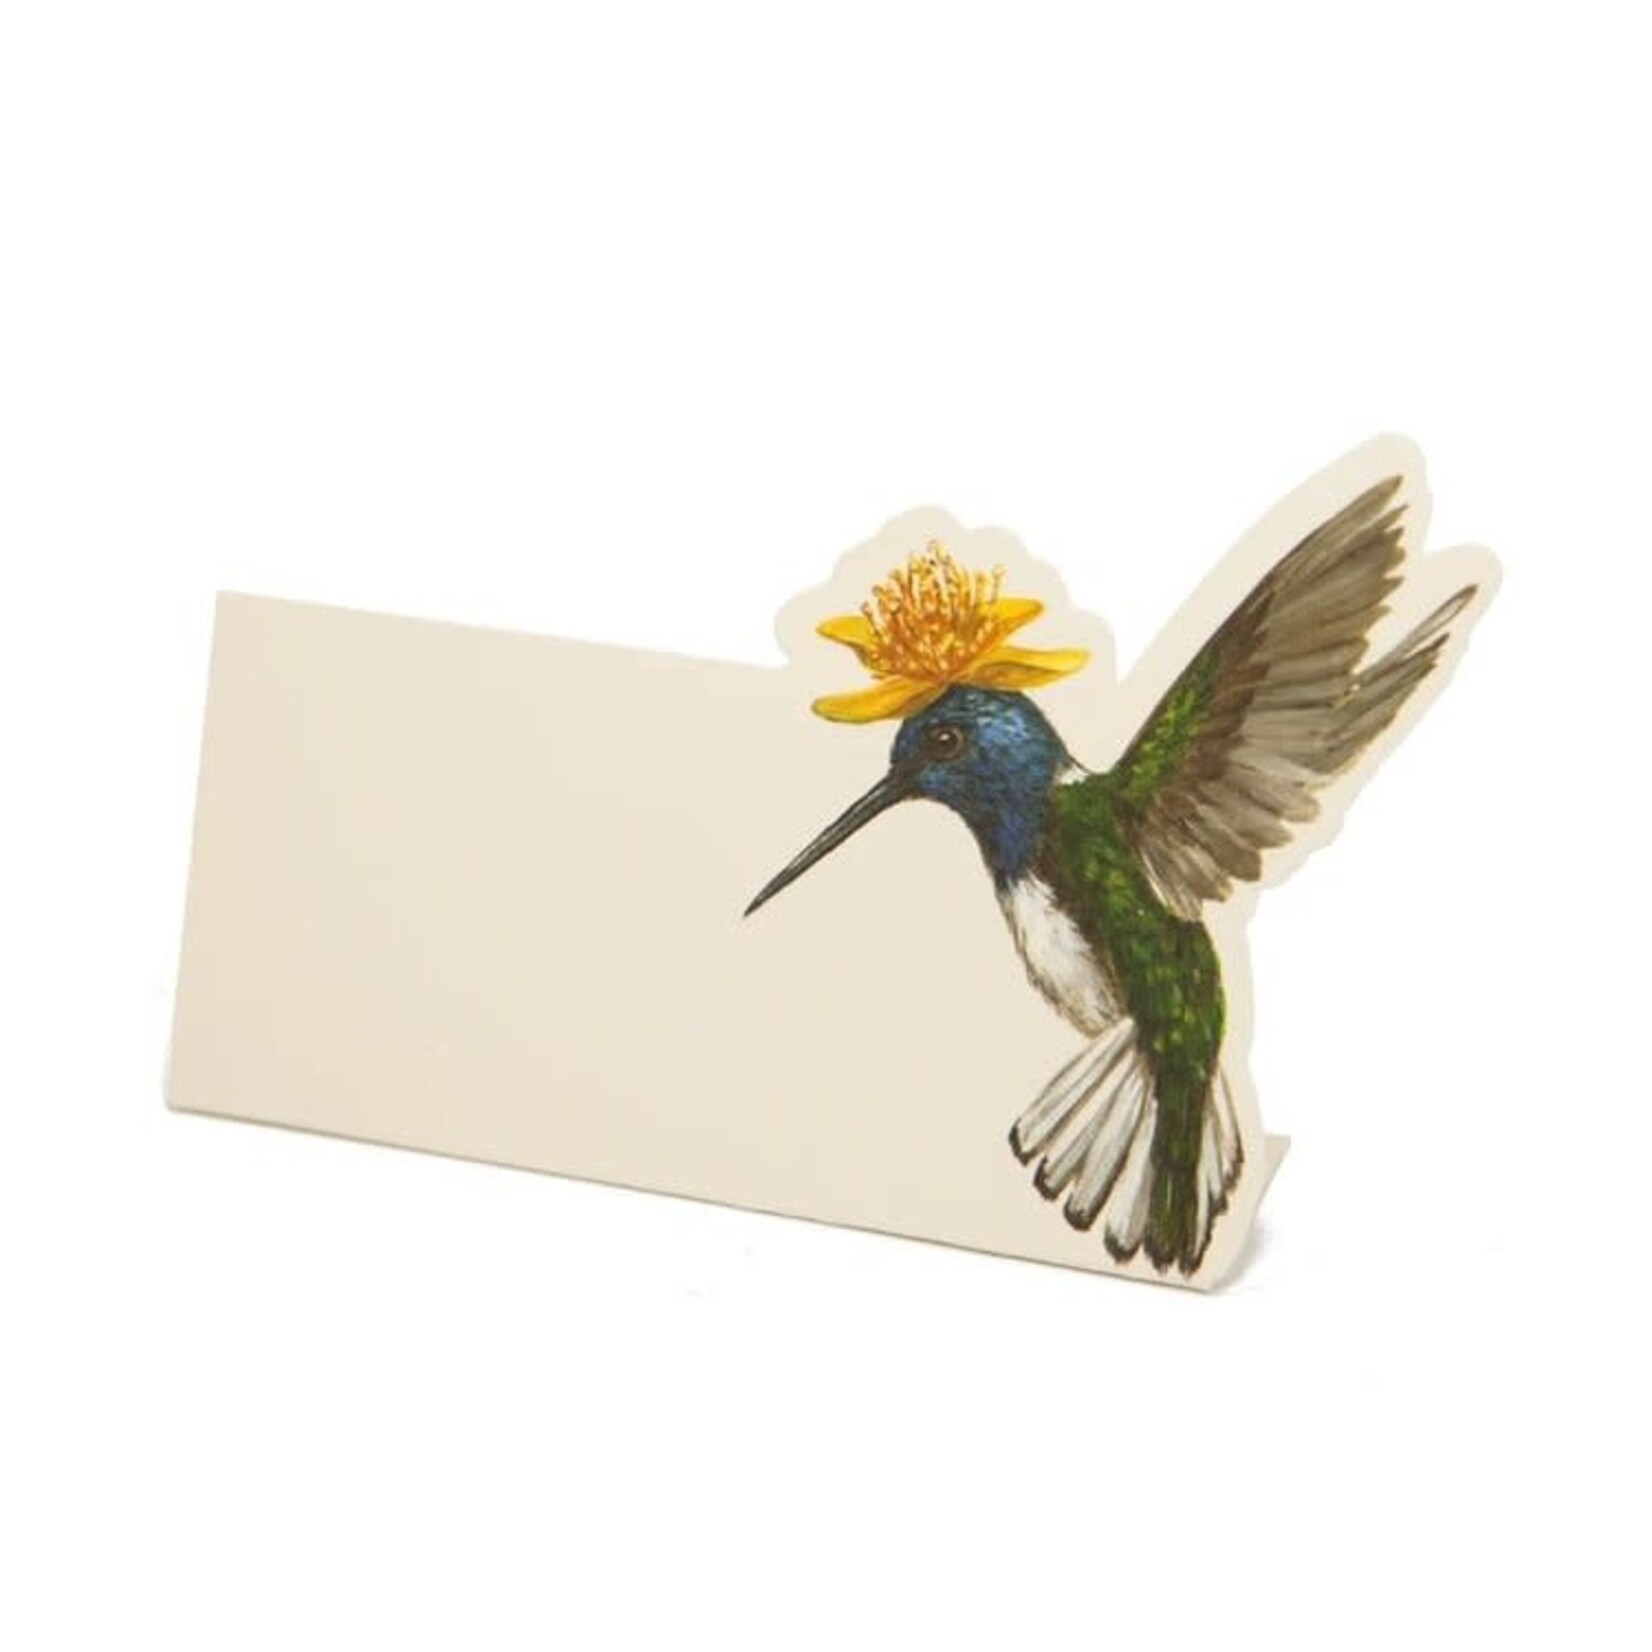 Hester & Cook Hummingbird Place Cards